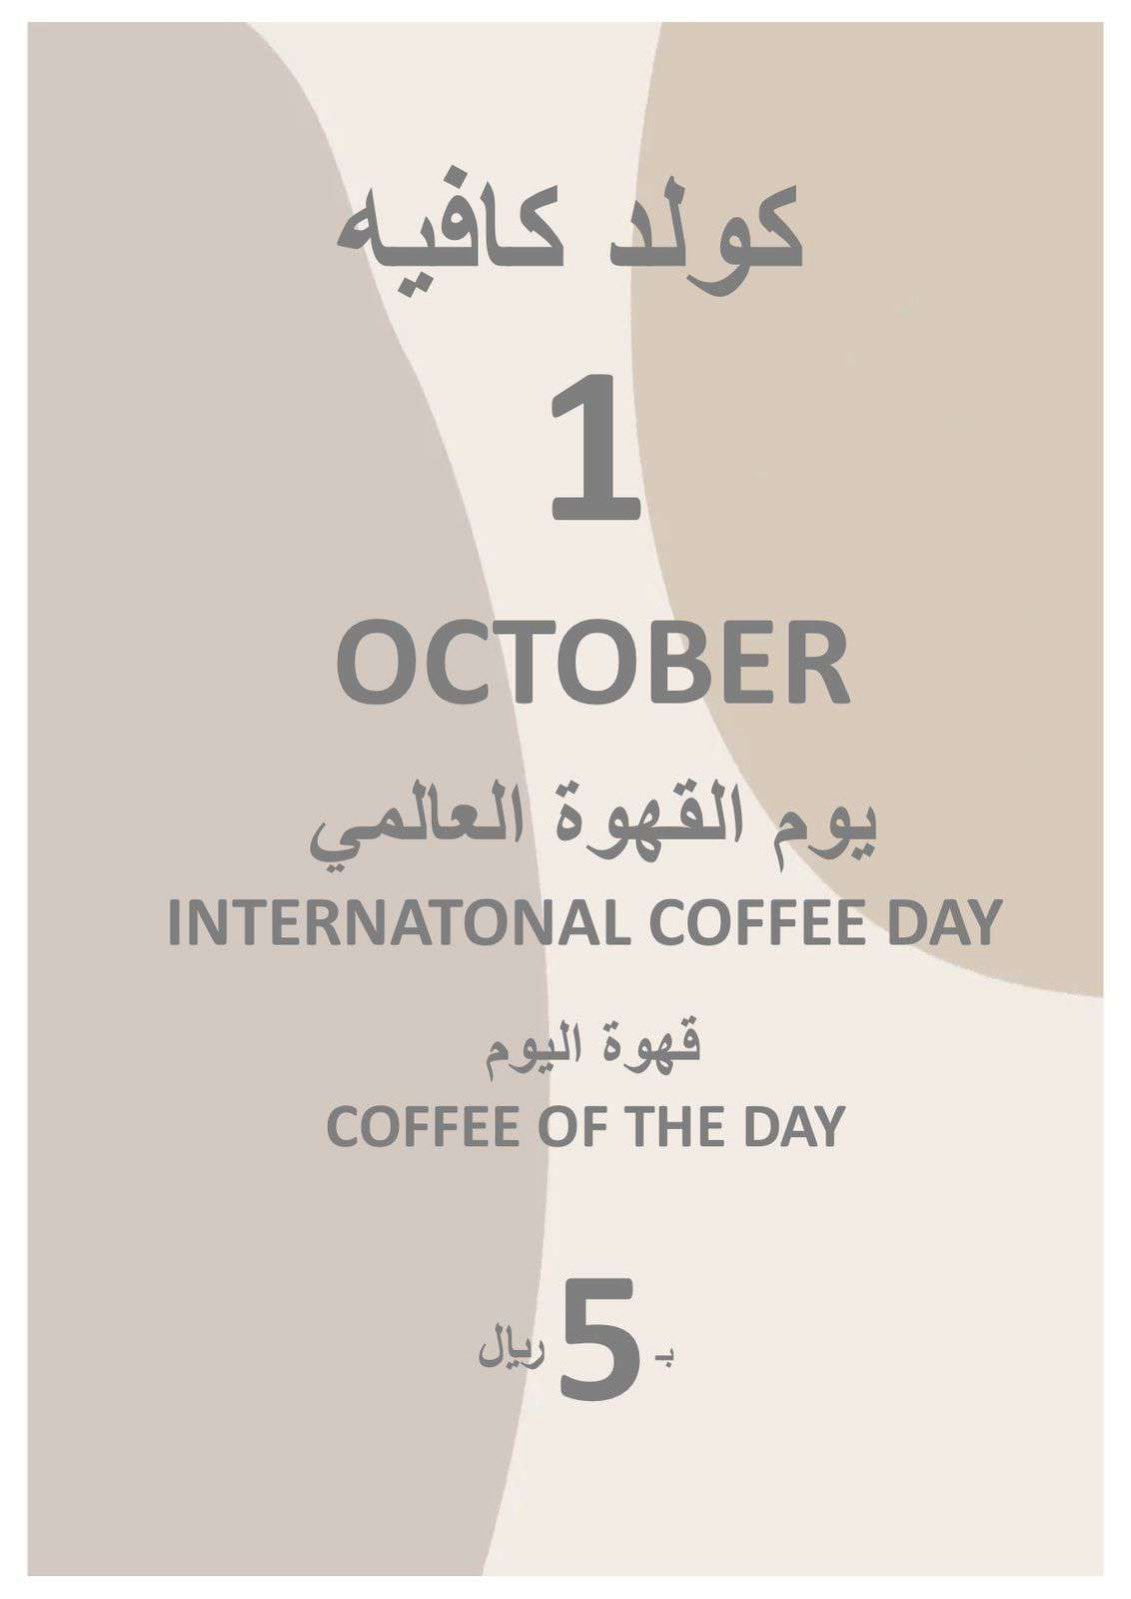 Fd8PRNjWIAIqsbc - عروض يوم القهوة العالمي | عروض كافيهات السعودية